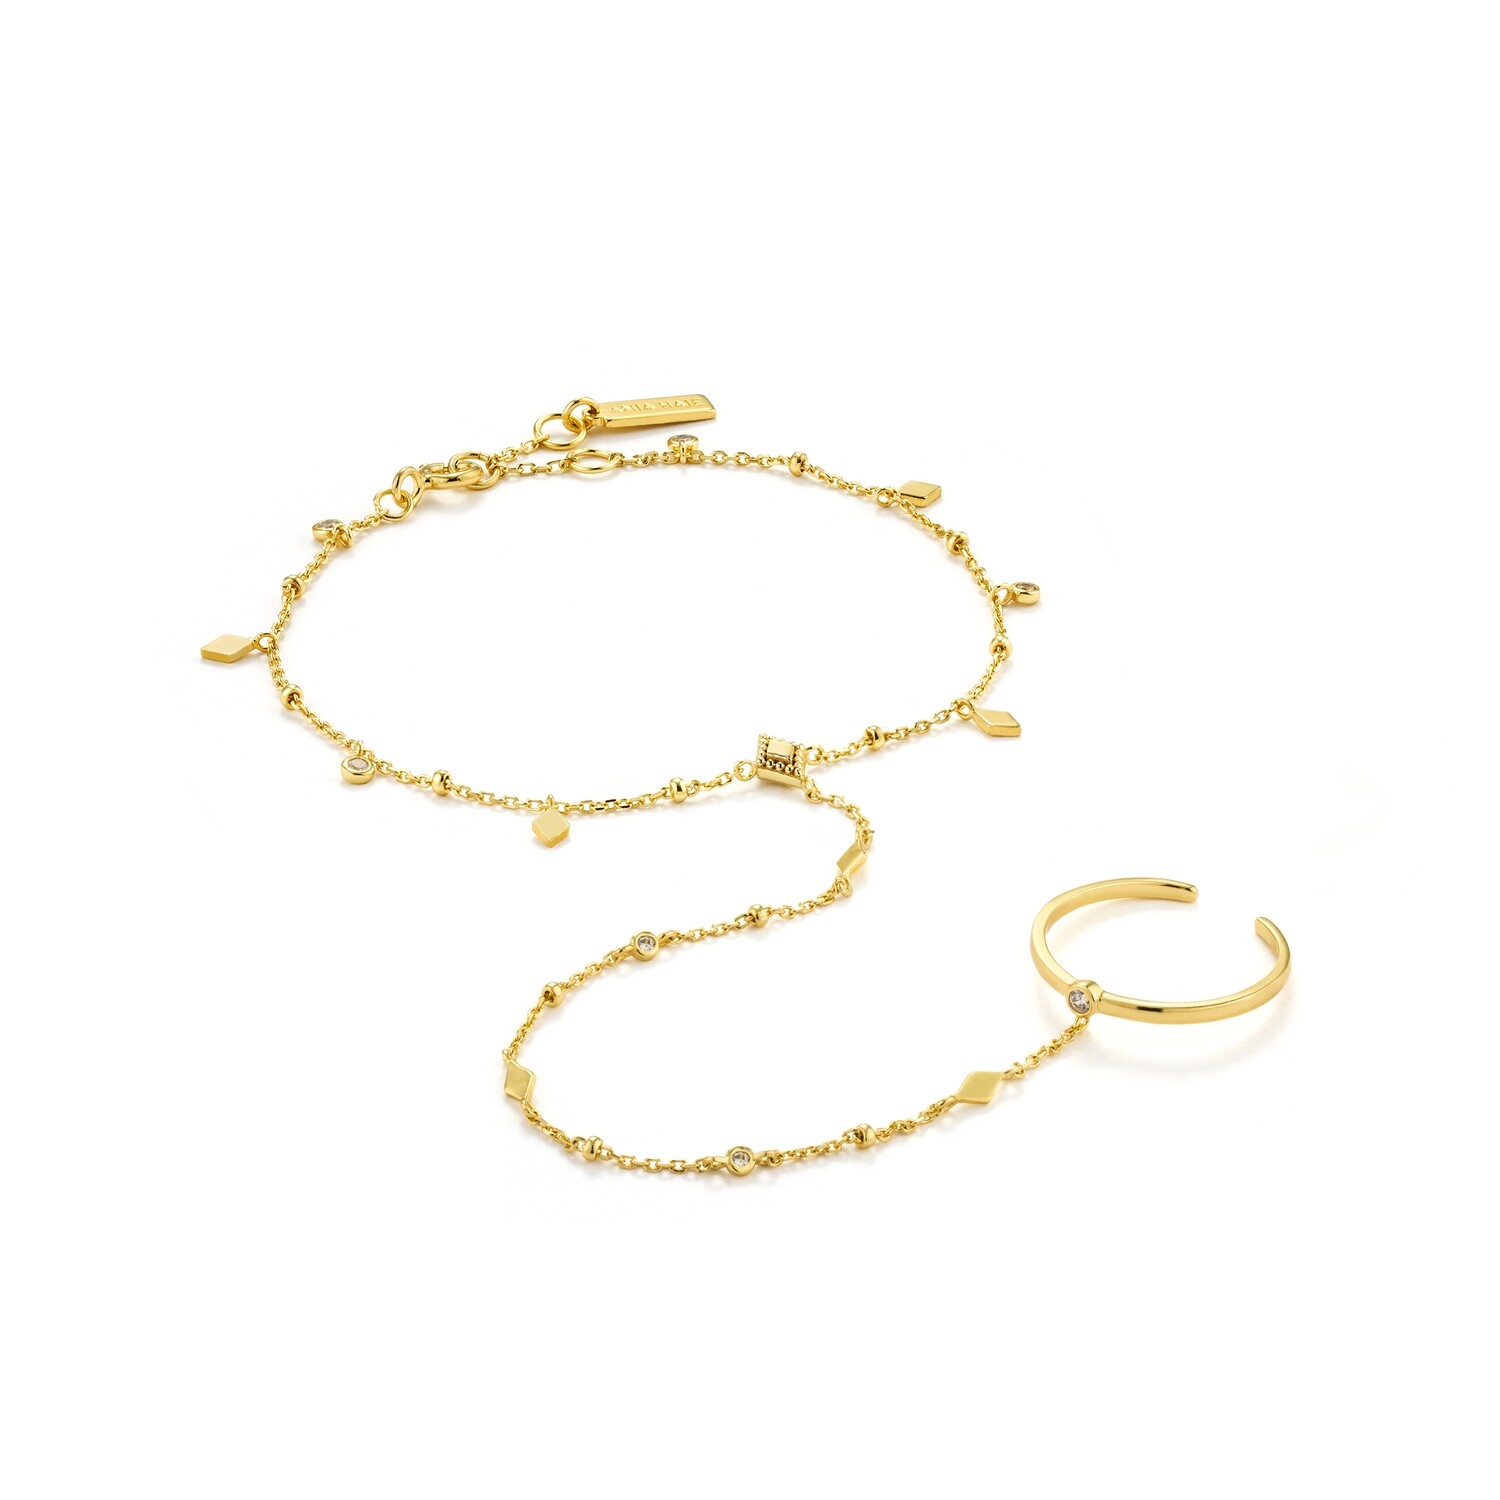 Ania Haie Bohemia Hand Chain 6.5-7.25" Bracelet - Gold